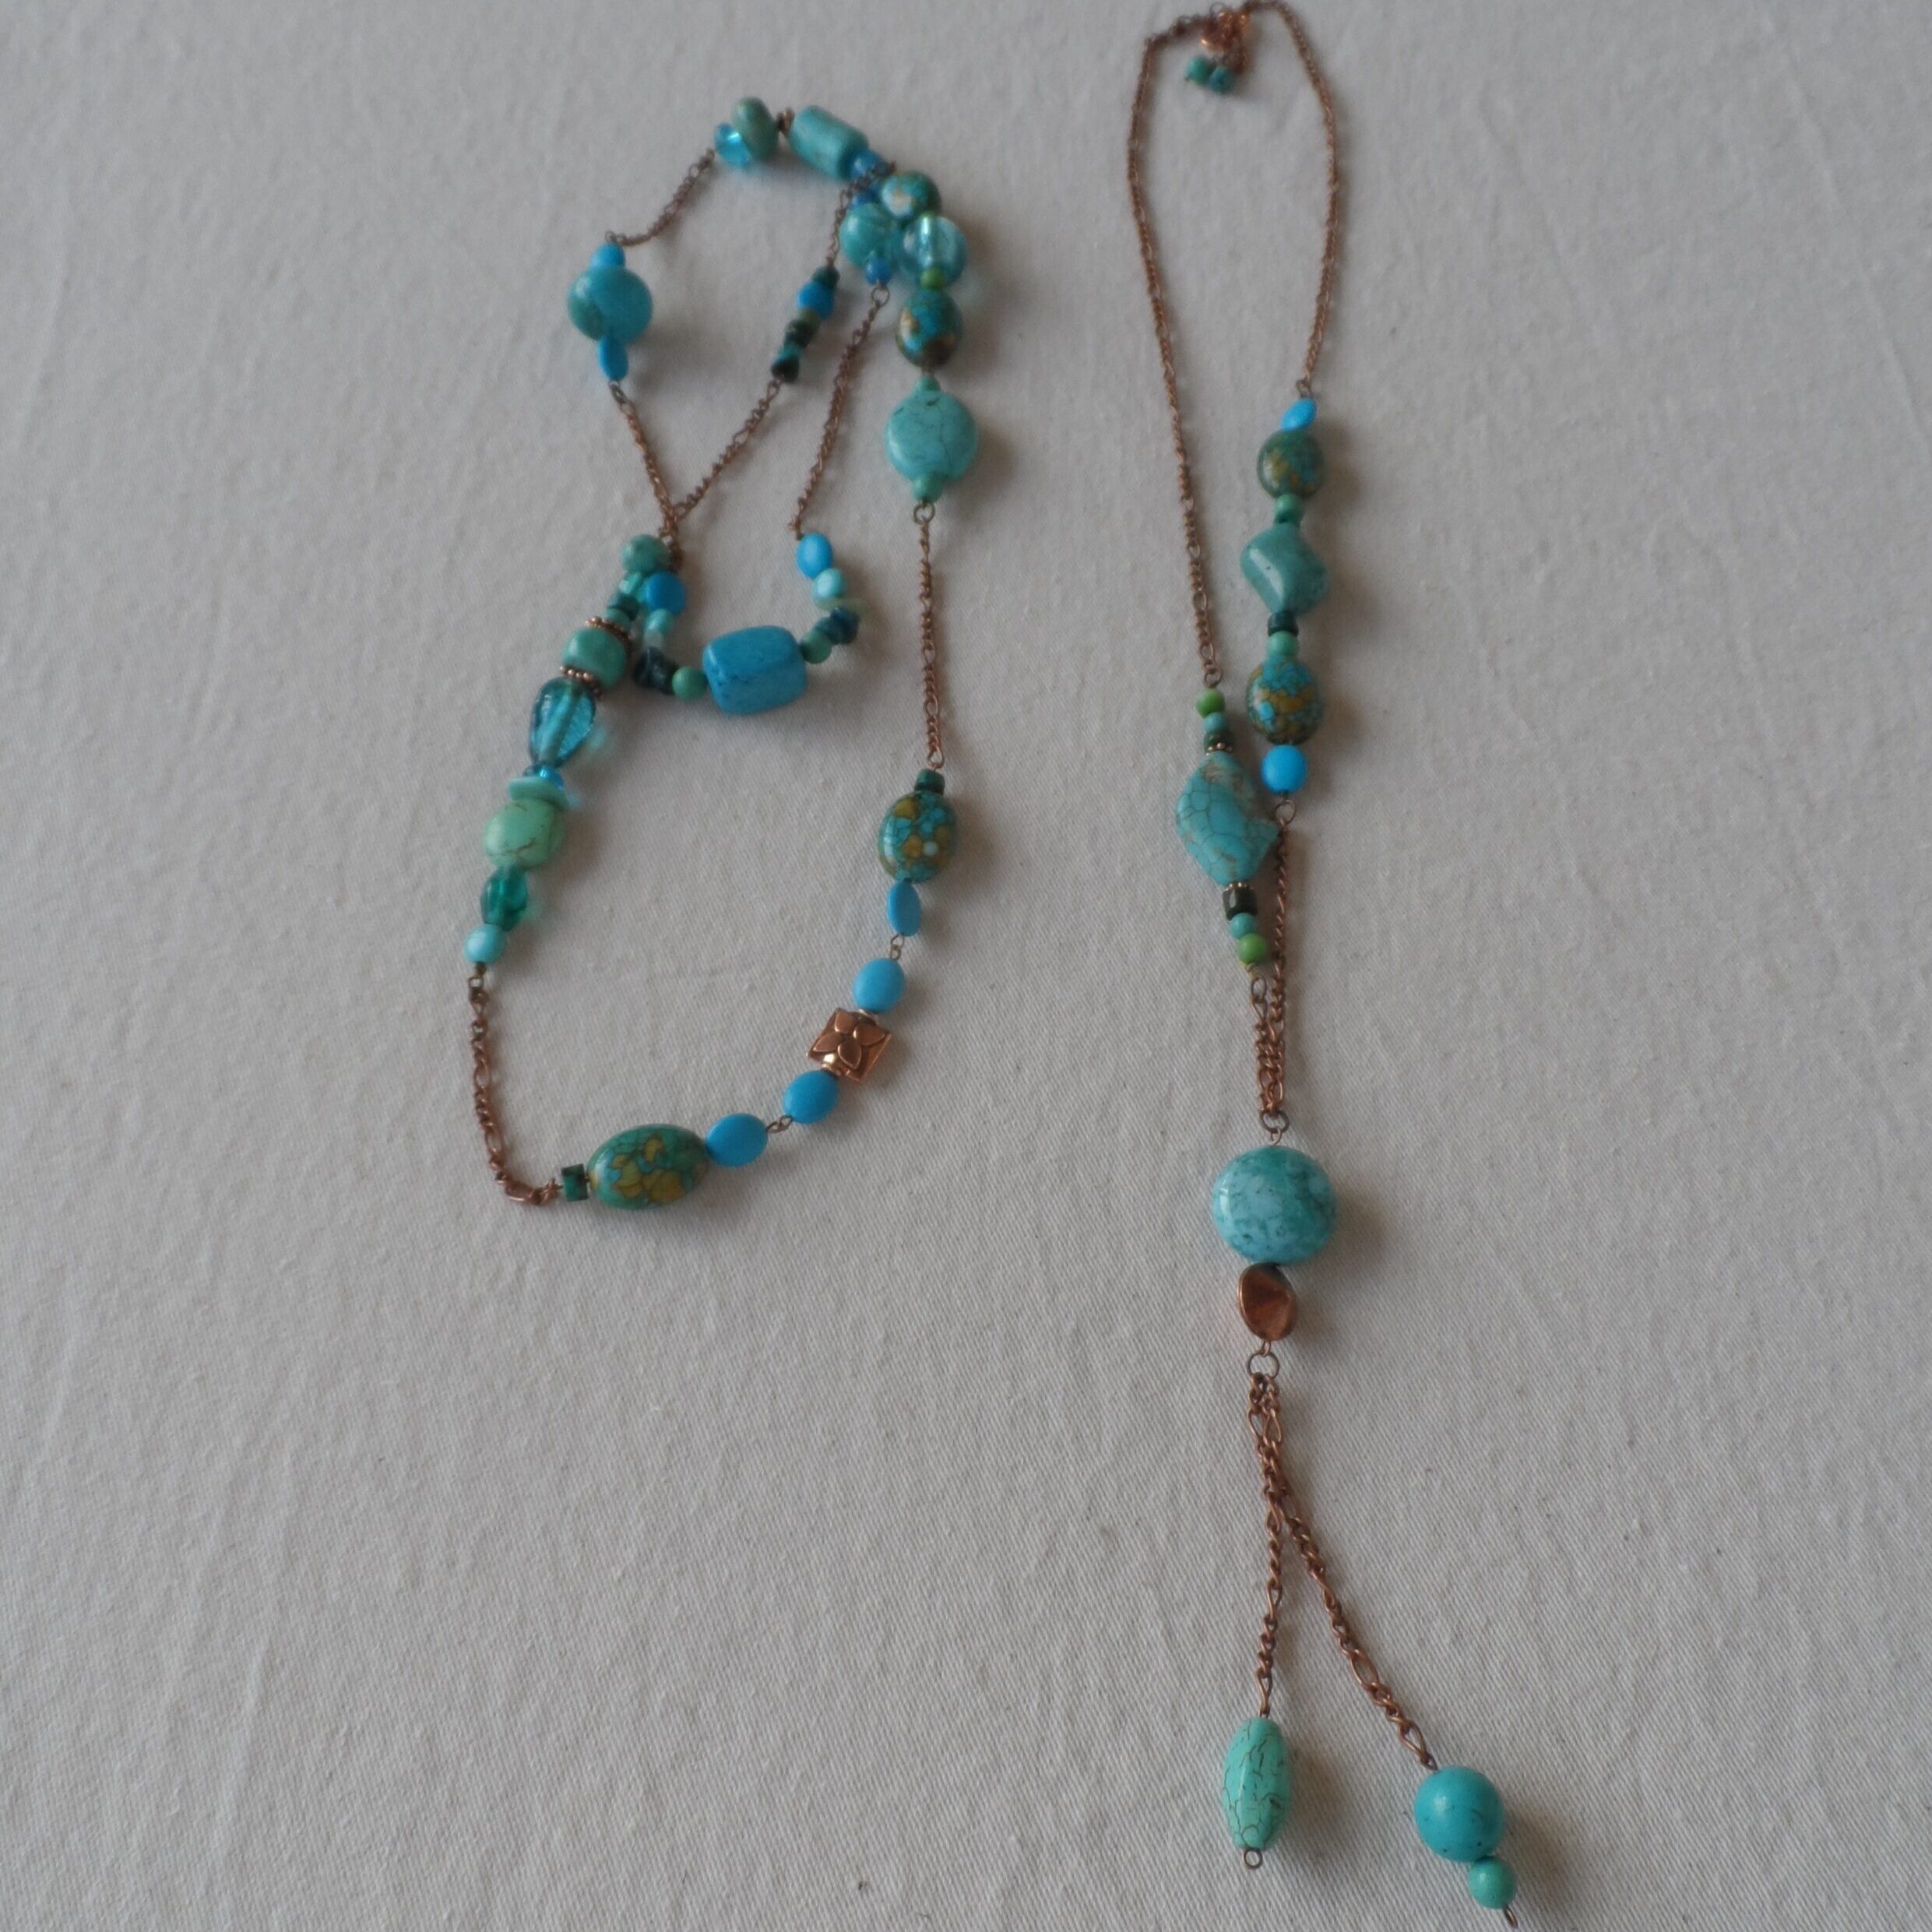 AQUA beads & chain - 2 pieces